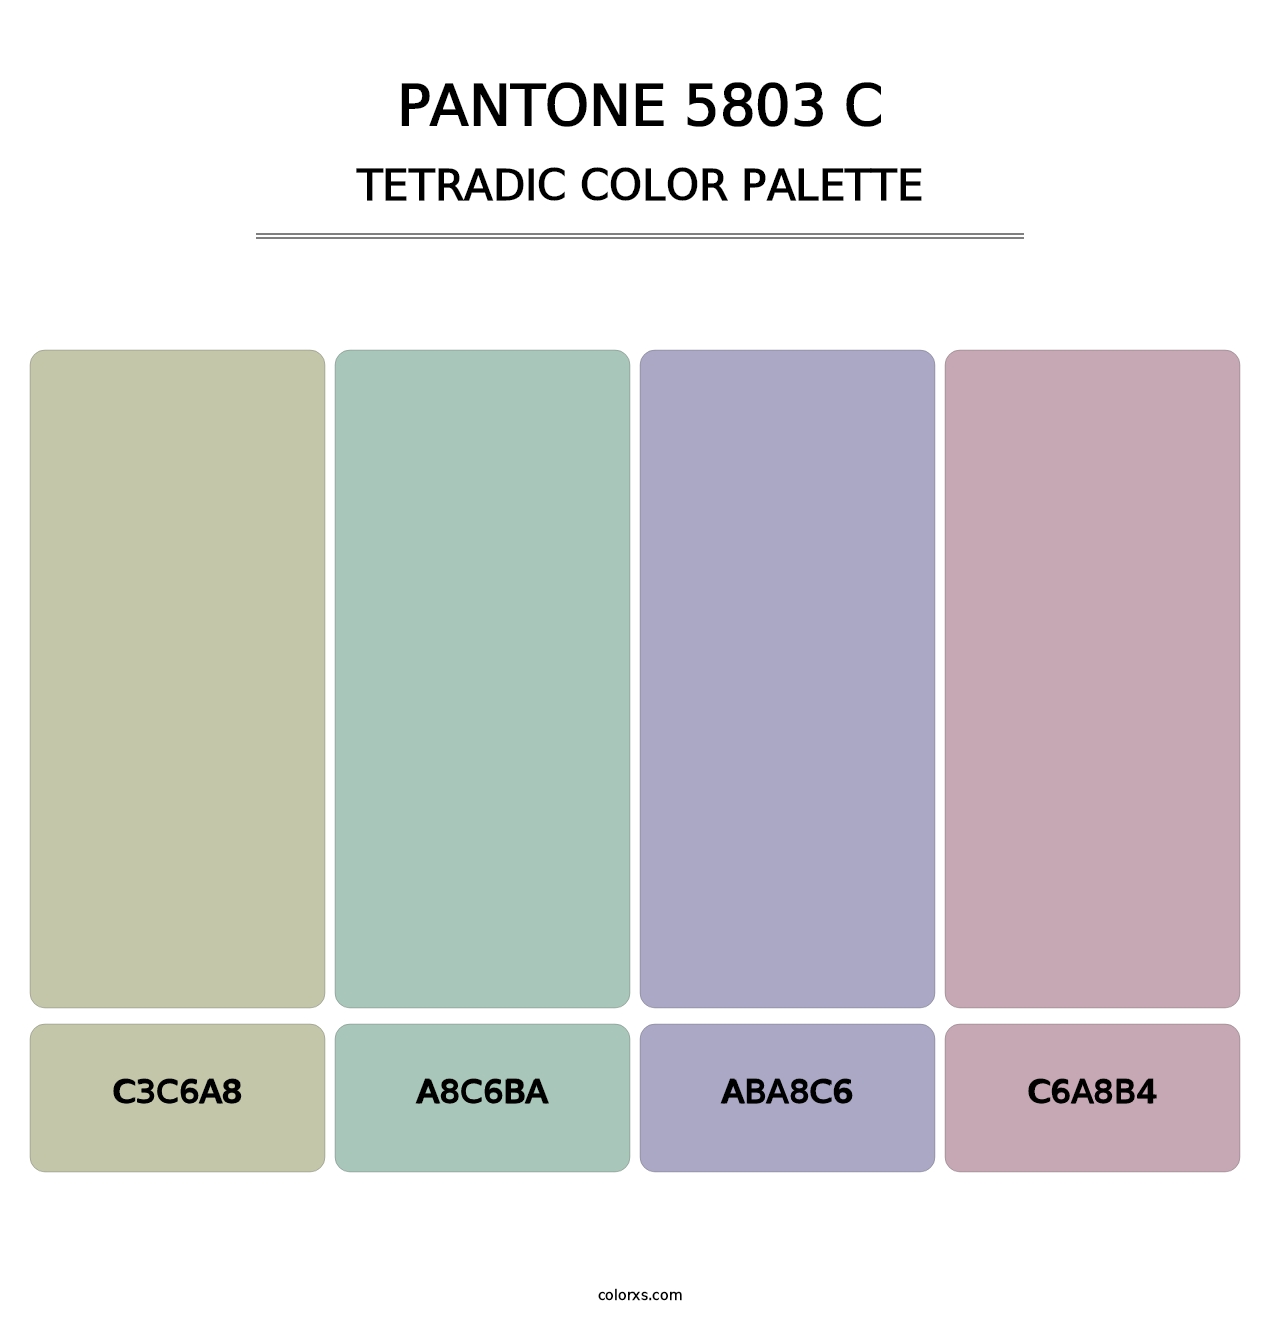 PANTONE 5803 C - Tetradic Color Palette